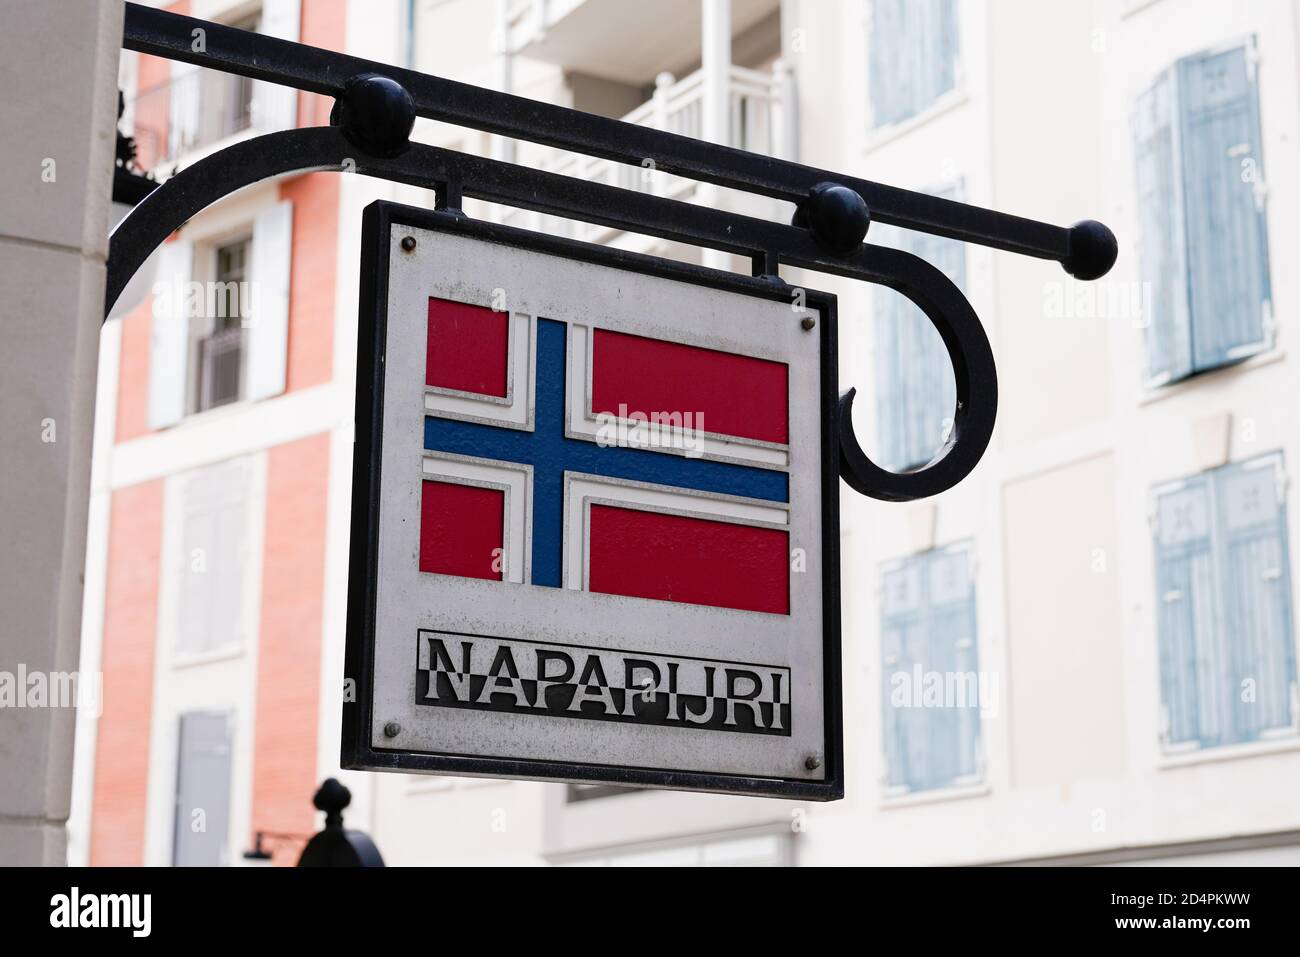 Bordeaux , Aquitaine / France - 10 01 2020 : Napapijri logo and text sign  front of store italian casual-wear brand norwegian flag Stock Photo - Alamy